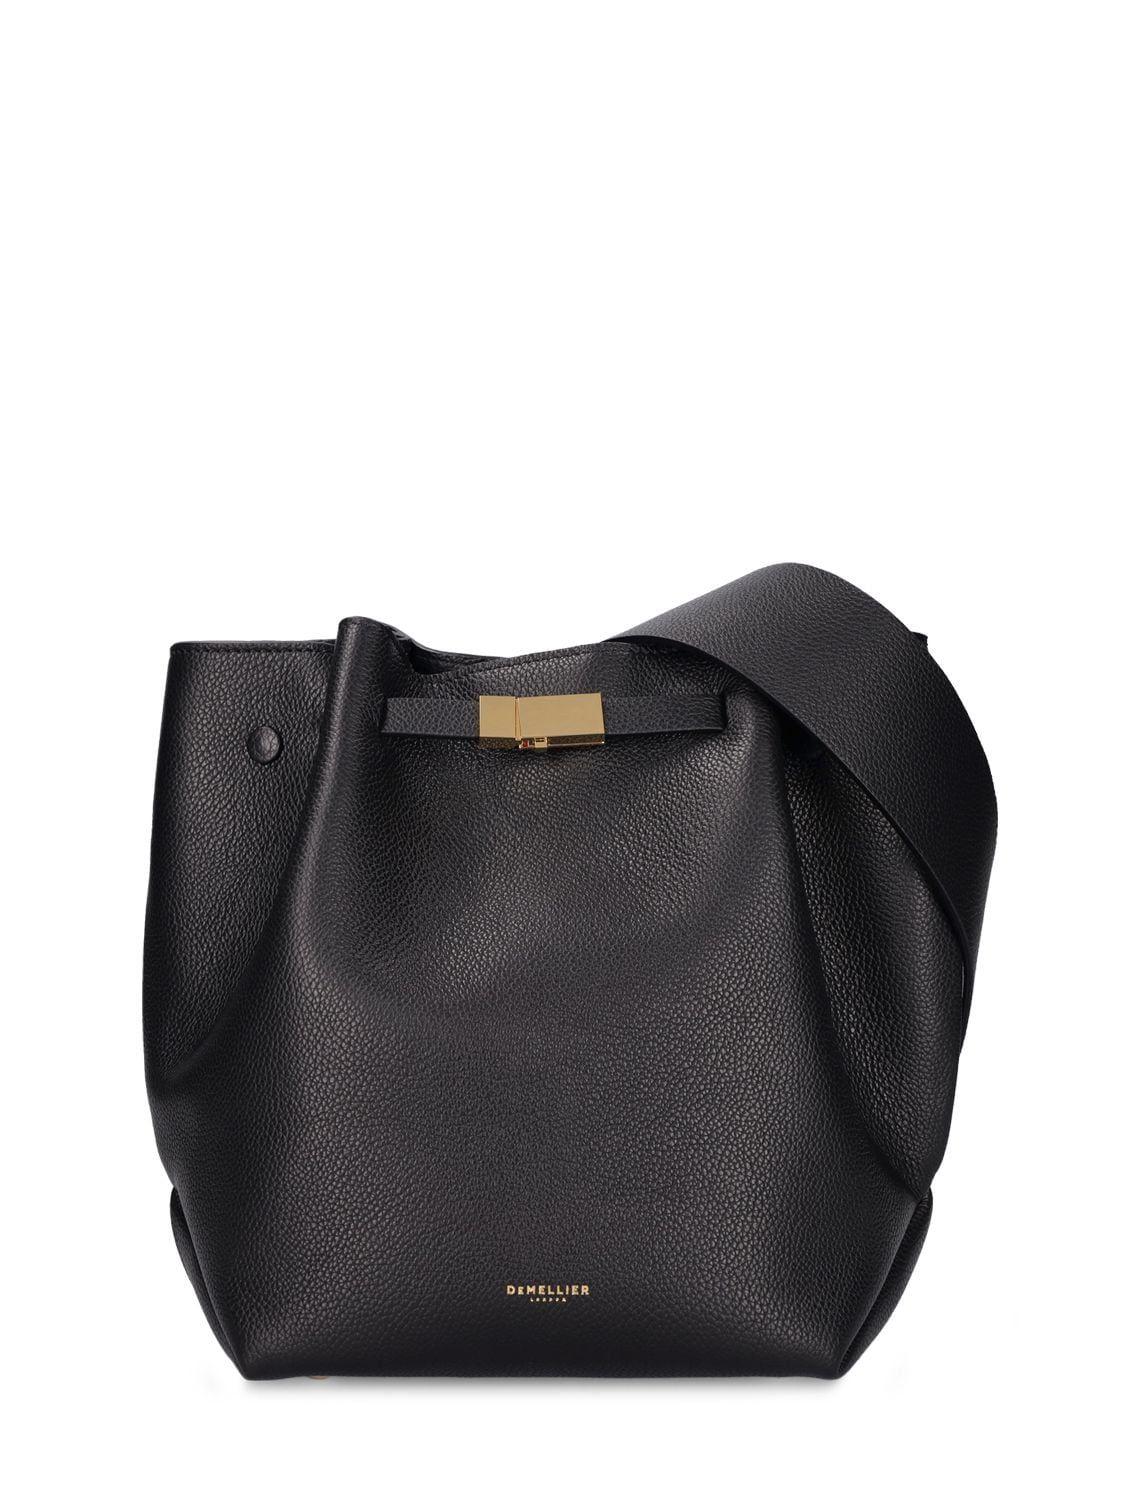 DeMellier New York Bucket Grain Leather Bag in Black | Lyst